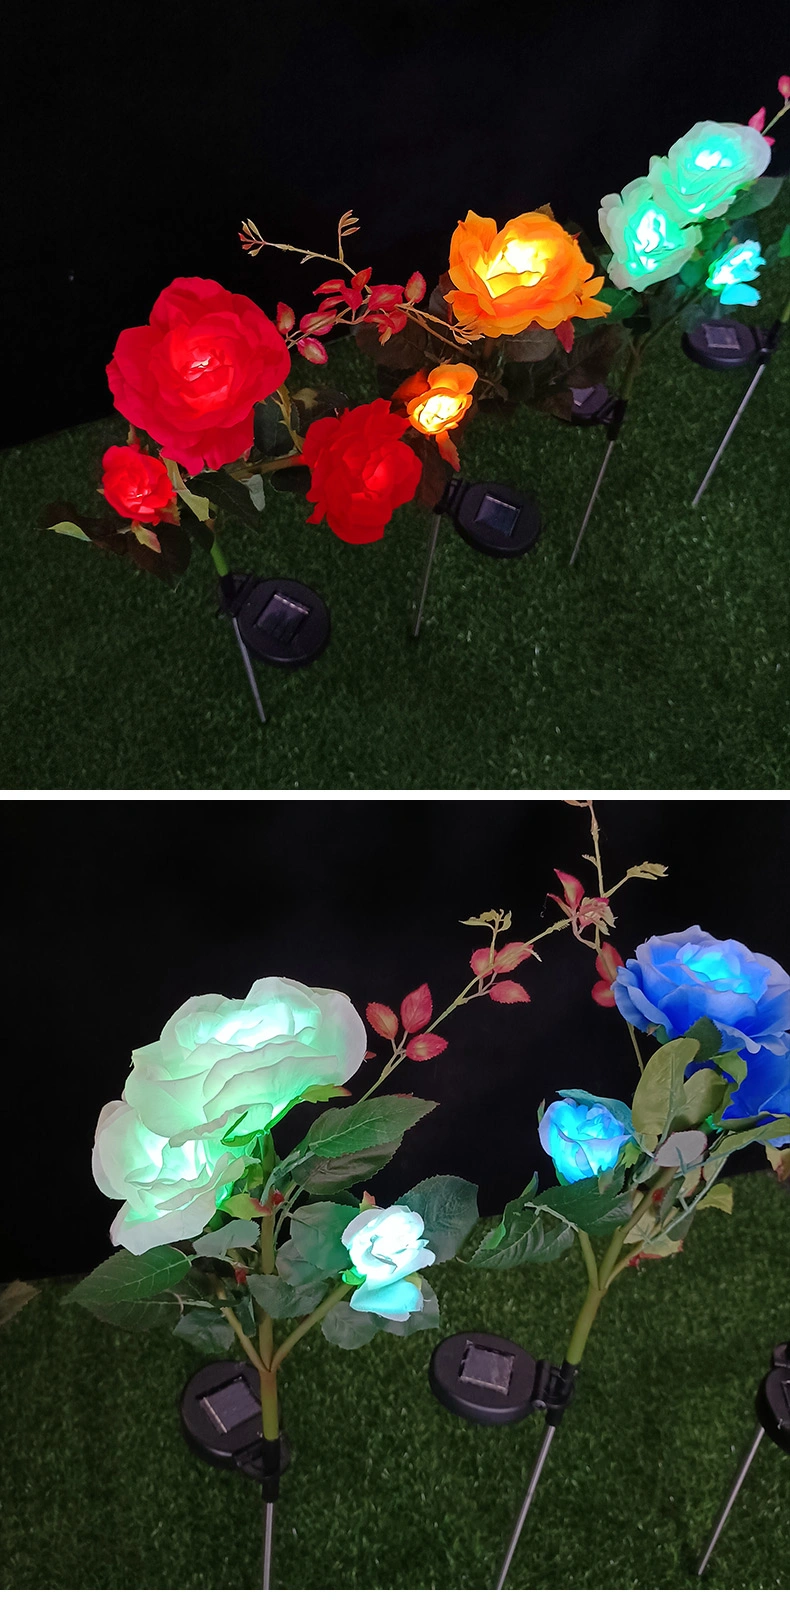 LED Solar Simulation Rose Flower Light Outdoor Lawn Ground Insert Garden Simulation Flower Decorative Landscape Lamp